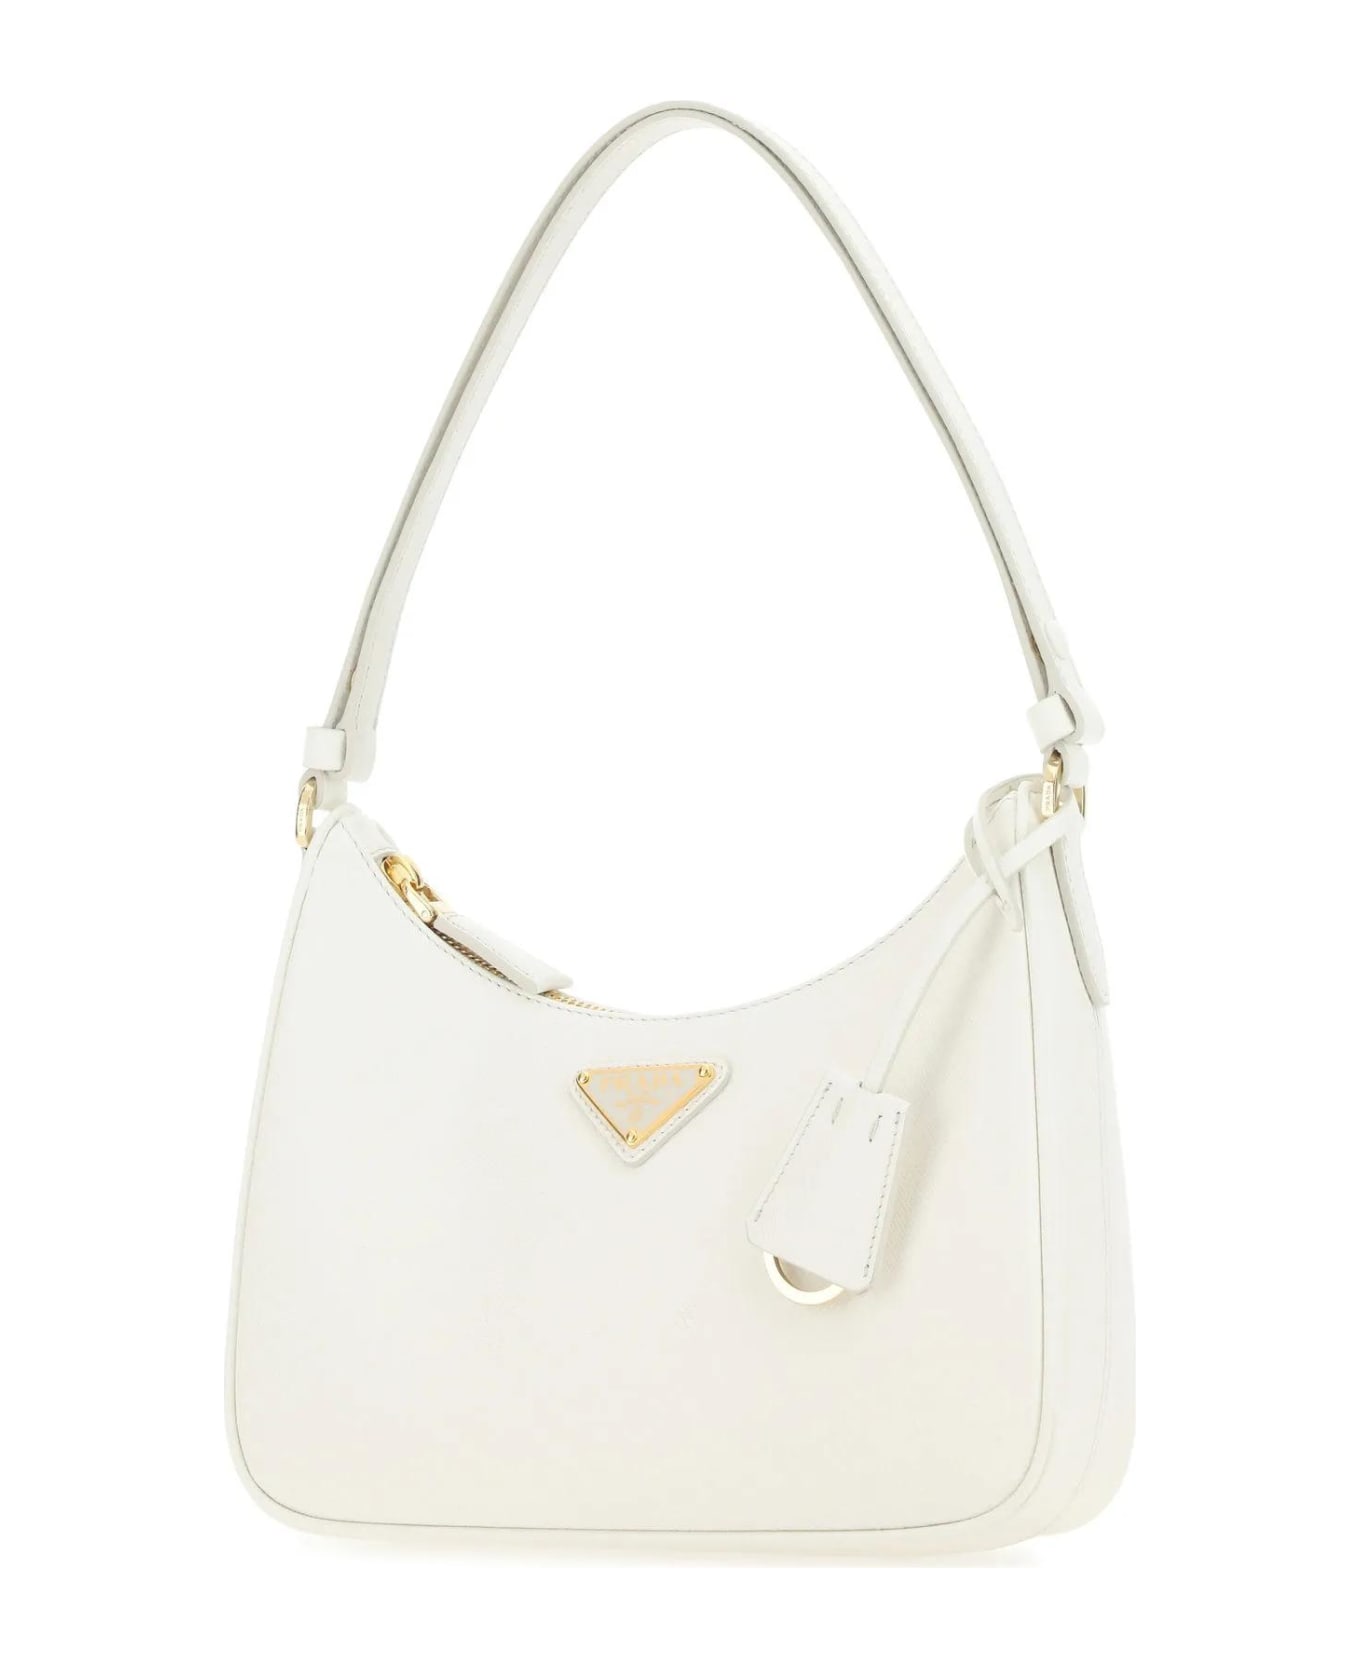 Prada White Leather Shoulder Bag